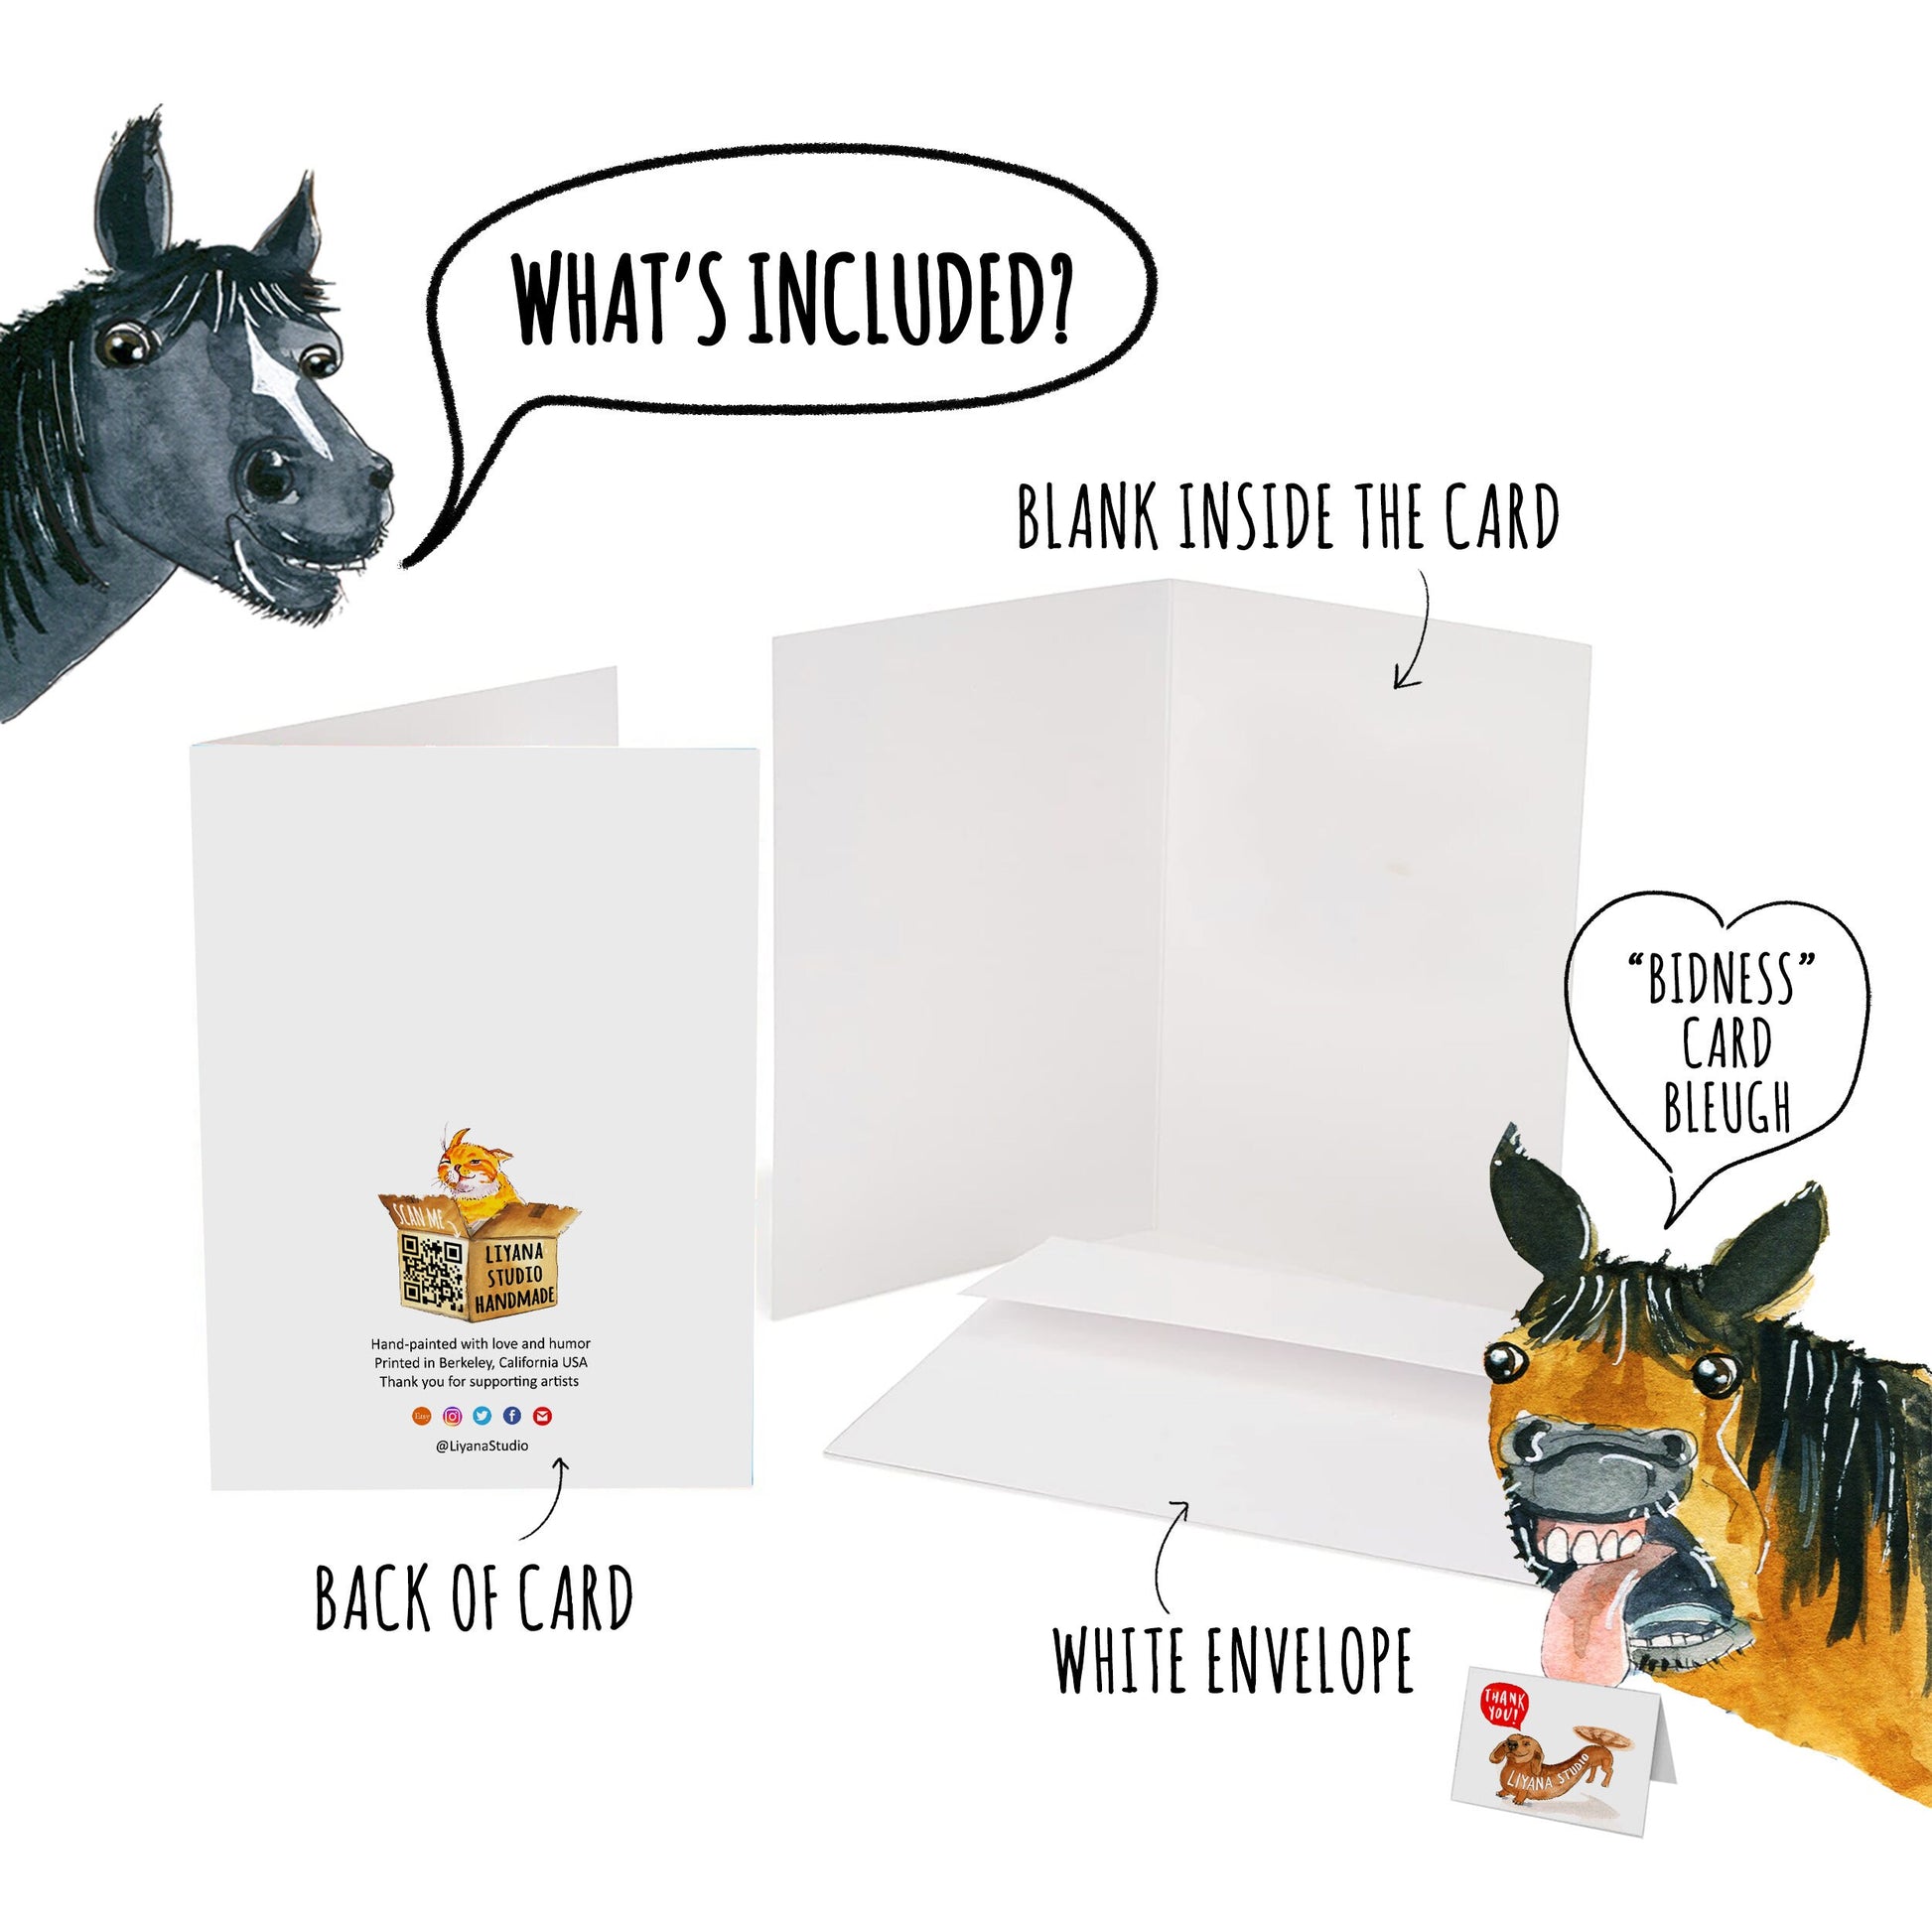 Possum Meets Santa Funny Christmas Card Set - Funny Holiday Gifts For Husband - Handmade Card By Liyana Studio Greeting